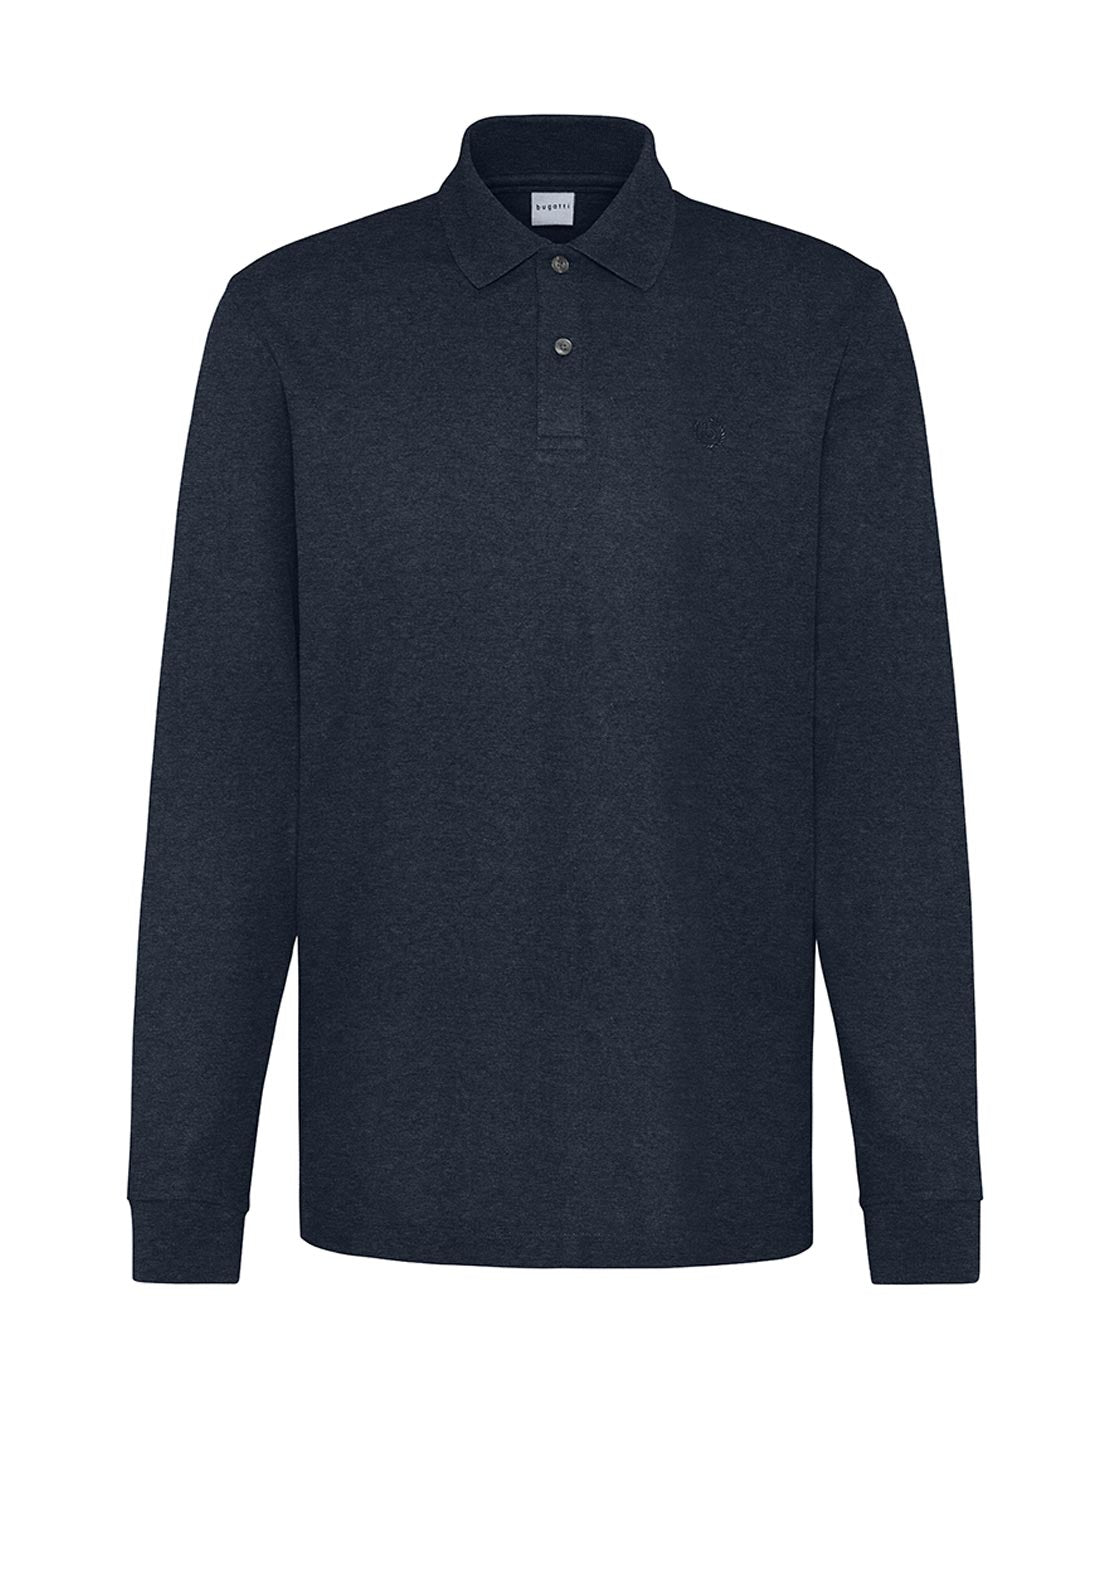 McElhinneys Bugatti - Sleeve Shirt, Polo Navy Long